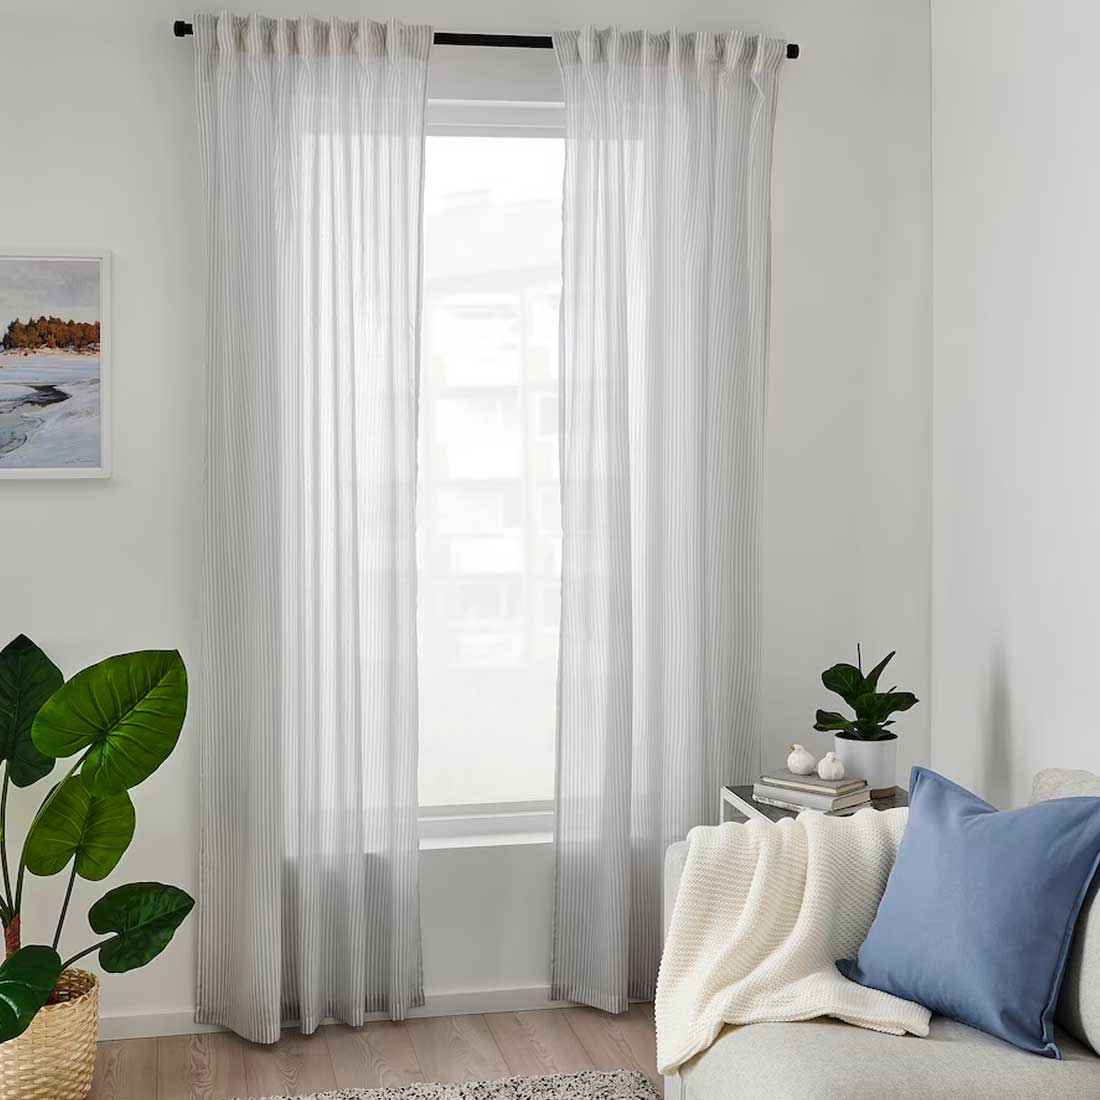 Bymott curtains white beige stripe